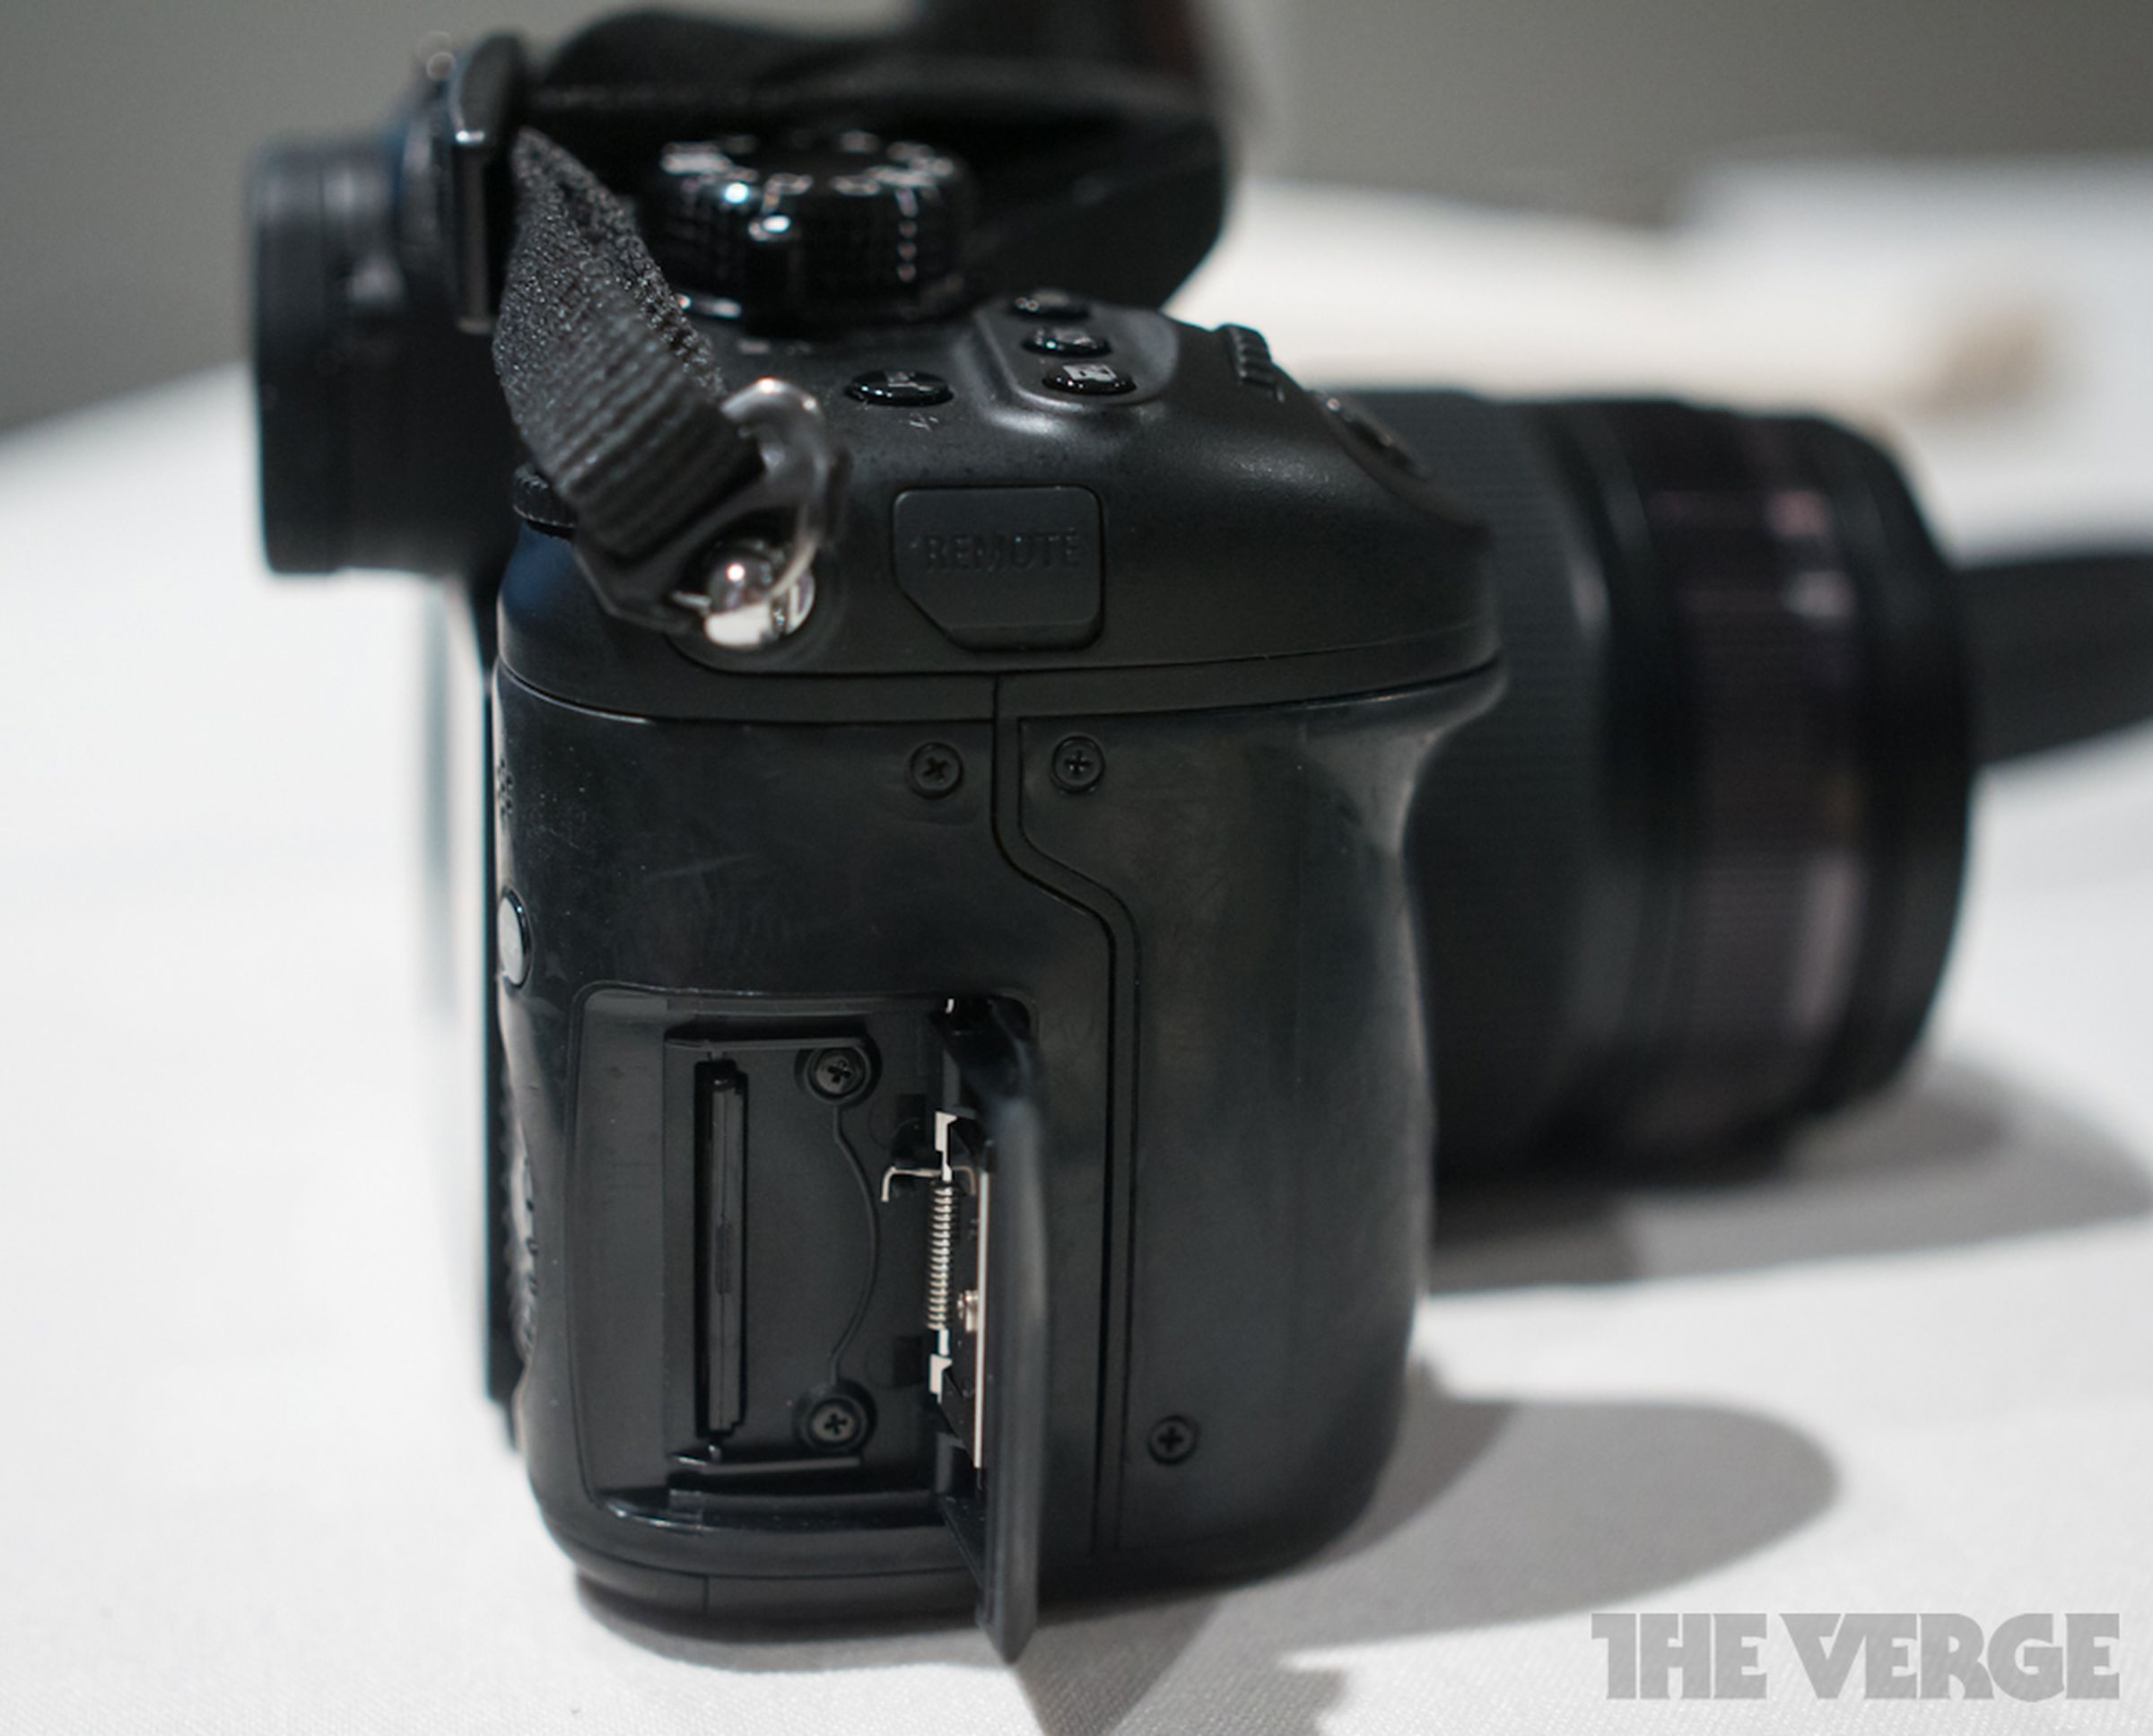 Panasonic DMC-GH3 Micro Four Thirds camera hands-on gallery